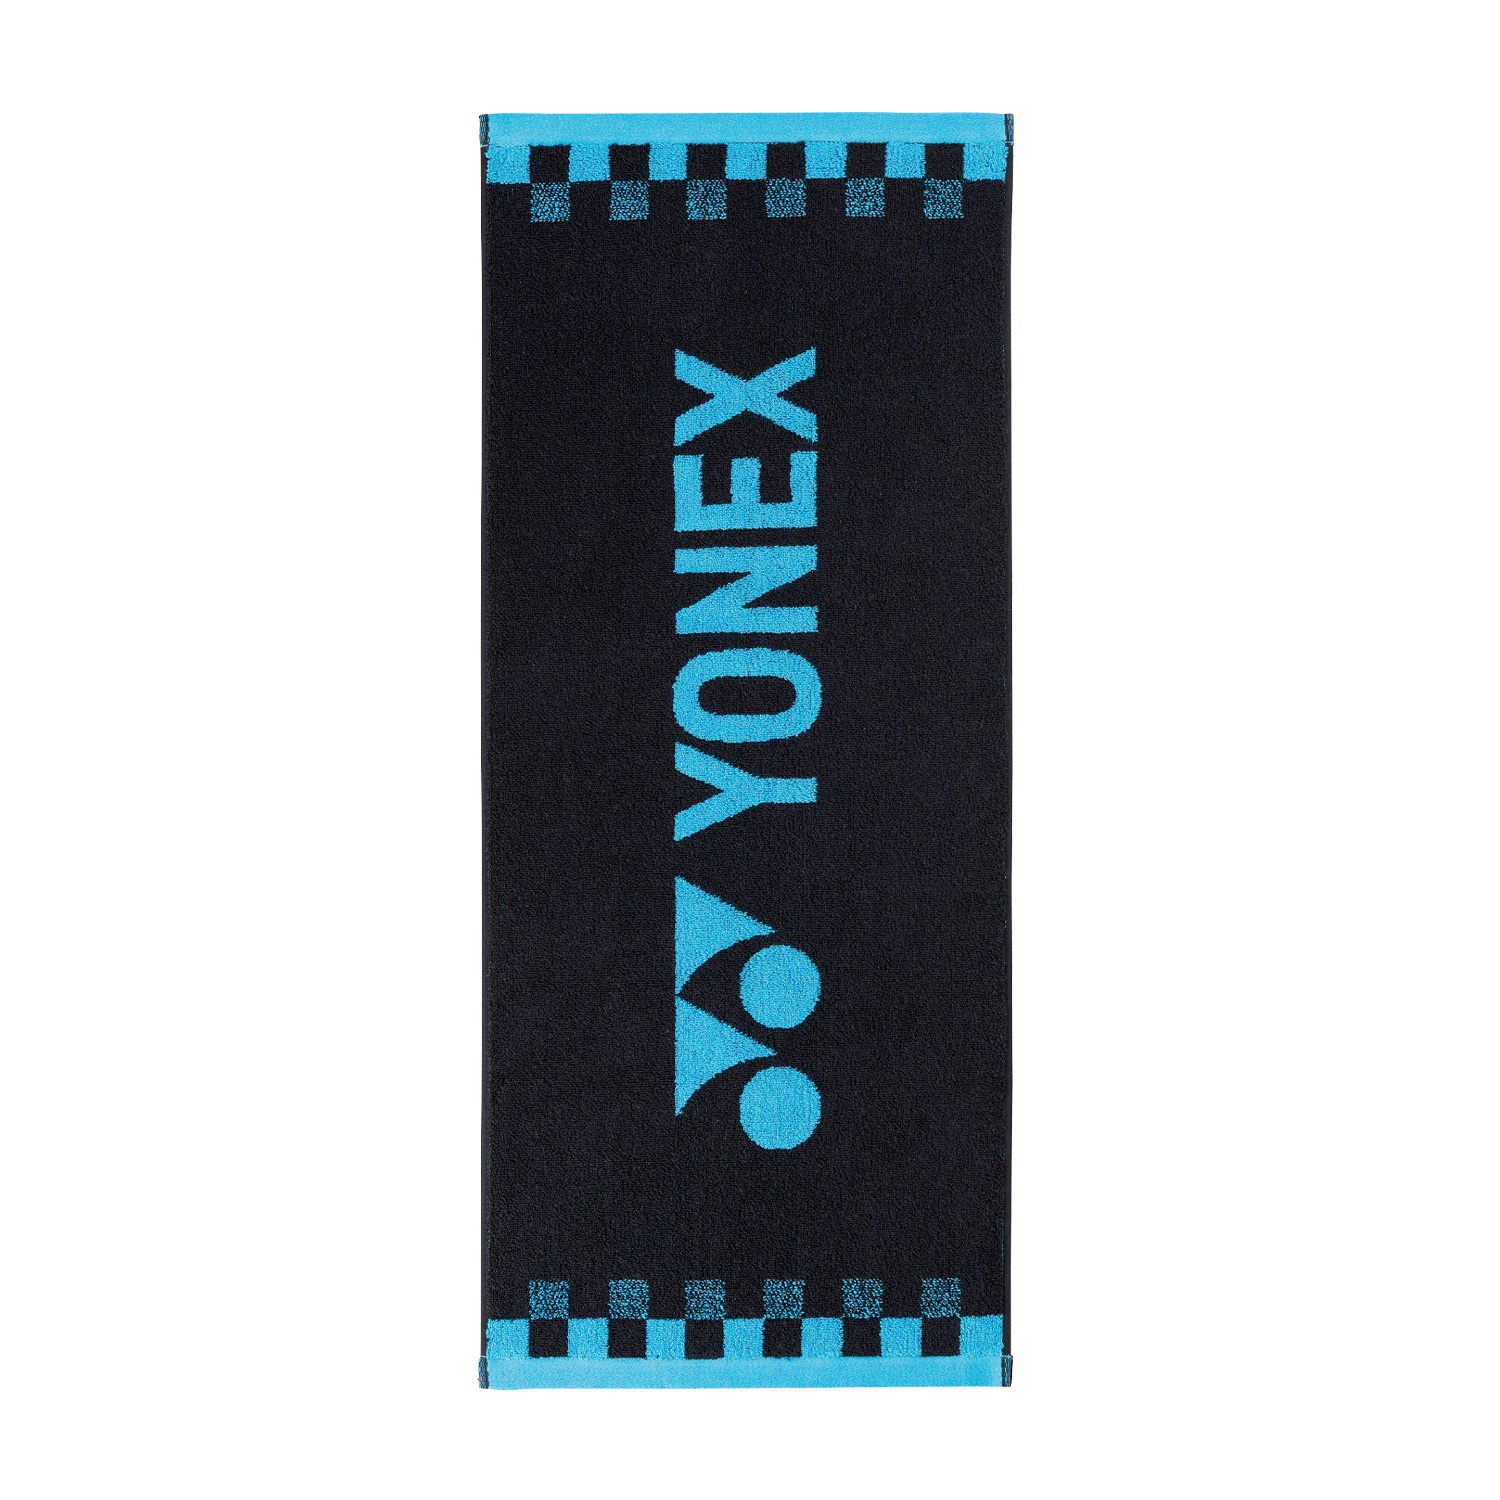 Yonex Pro Hand Towel - Black